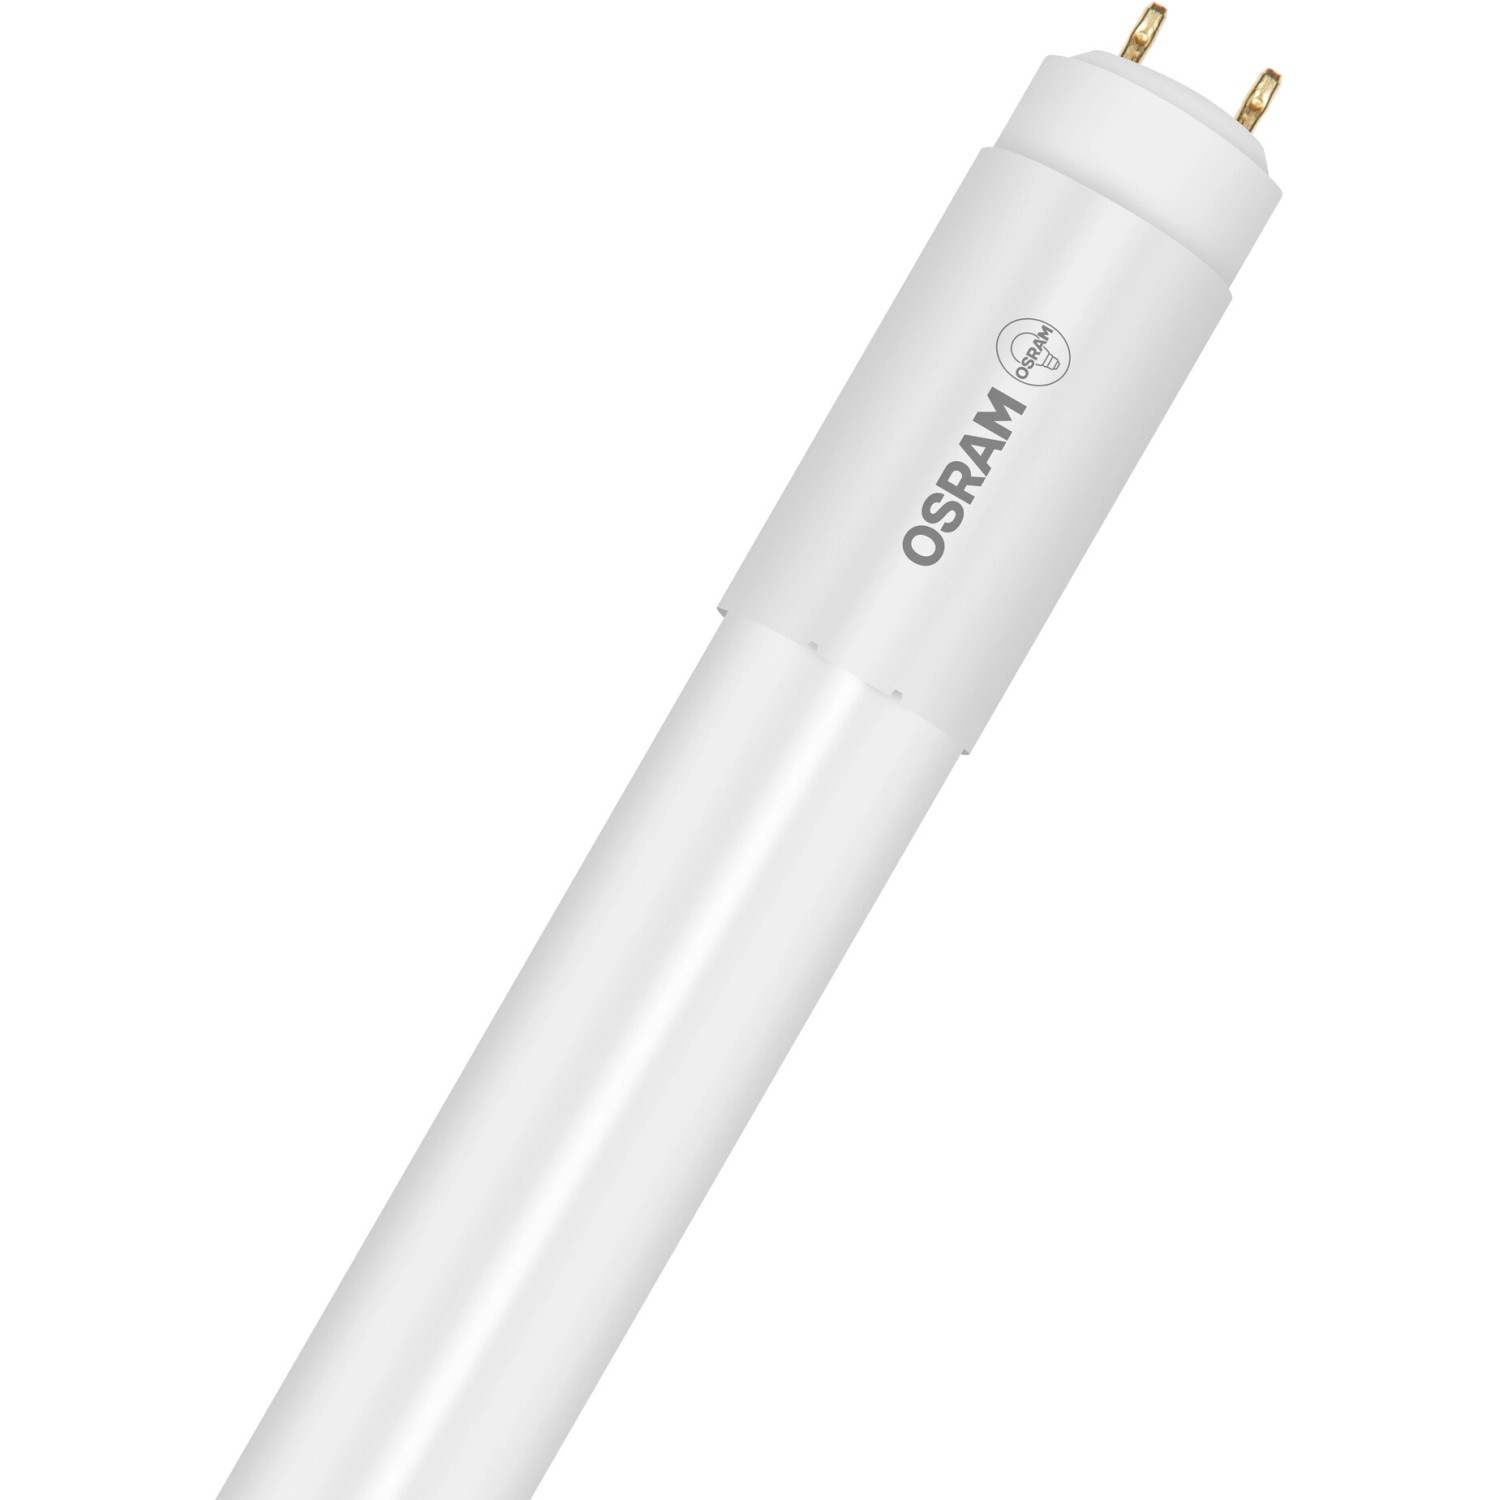 Osram LED-Leuchtstofflampen G13 Röhre 18 W 2000 lm 121,1 cm x 2,8 cm Weiß